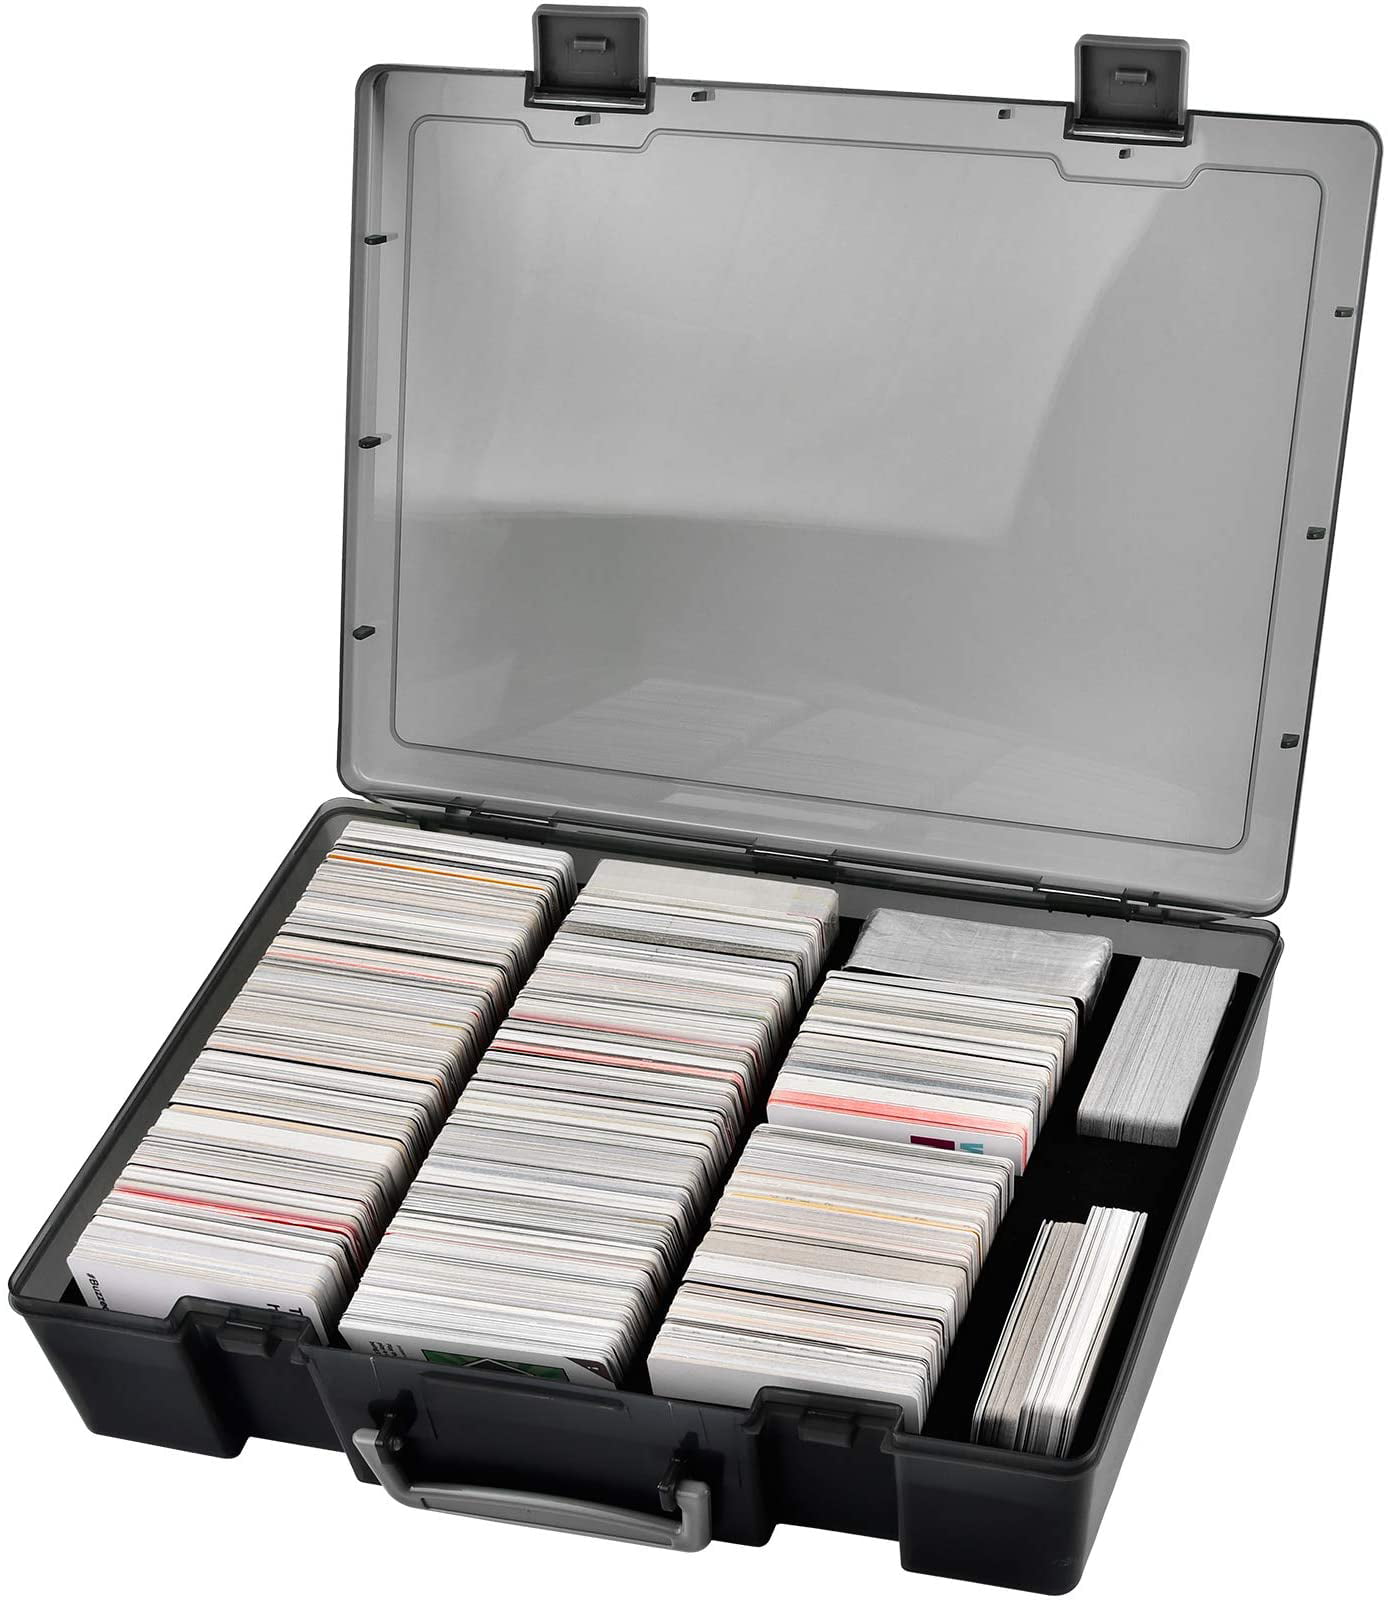 Trading Card Storage Box, 2300+ Playing Card Case Holder Organizer